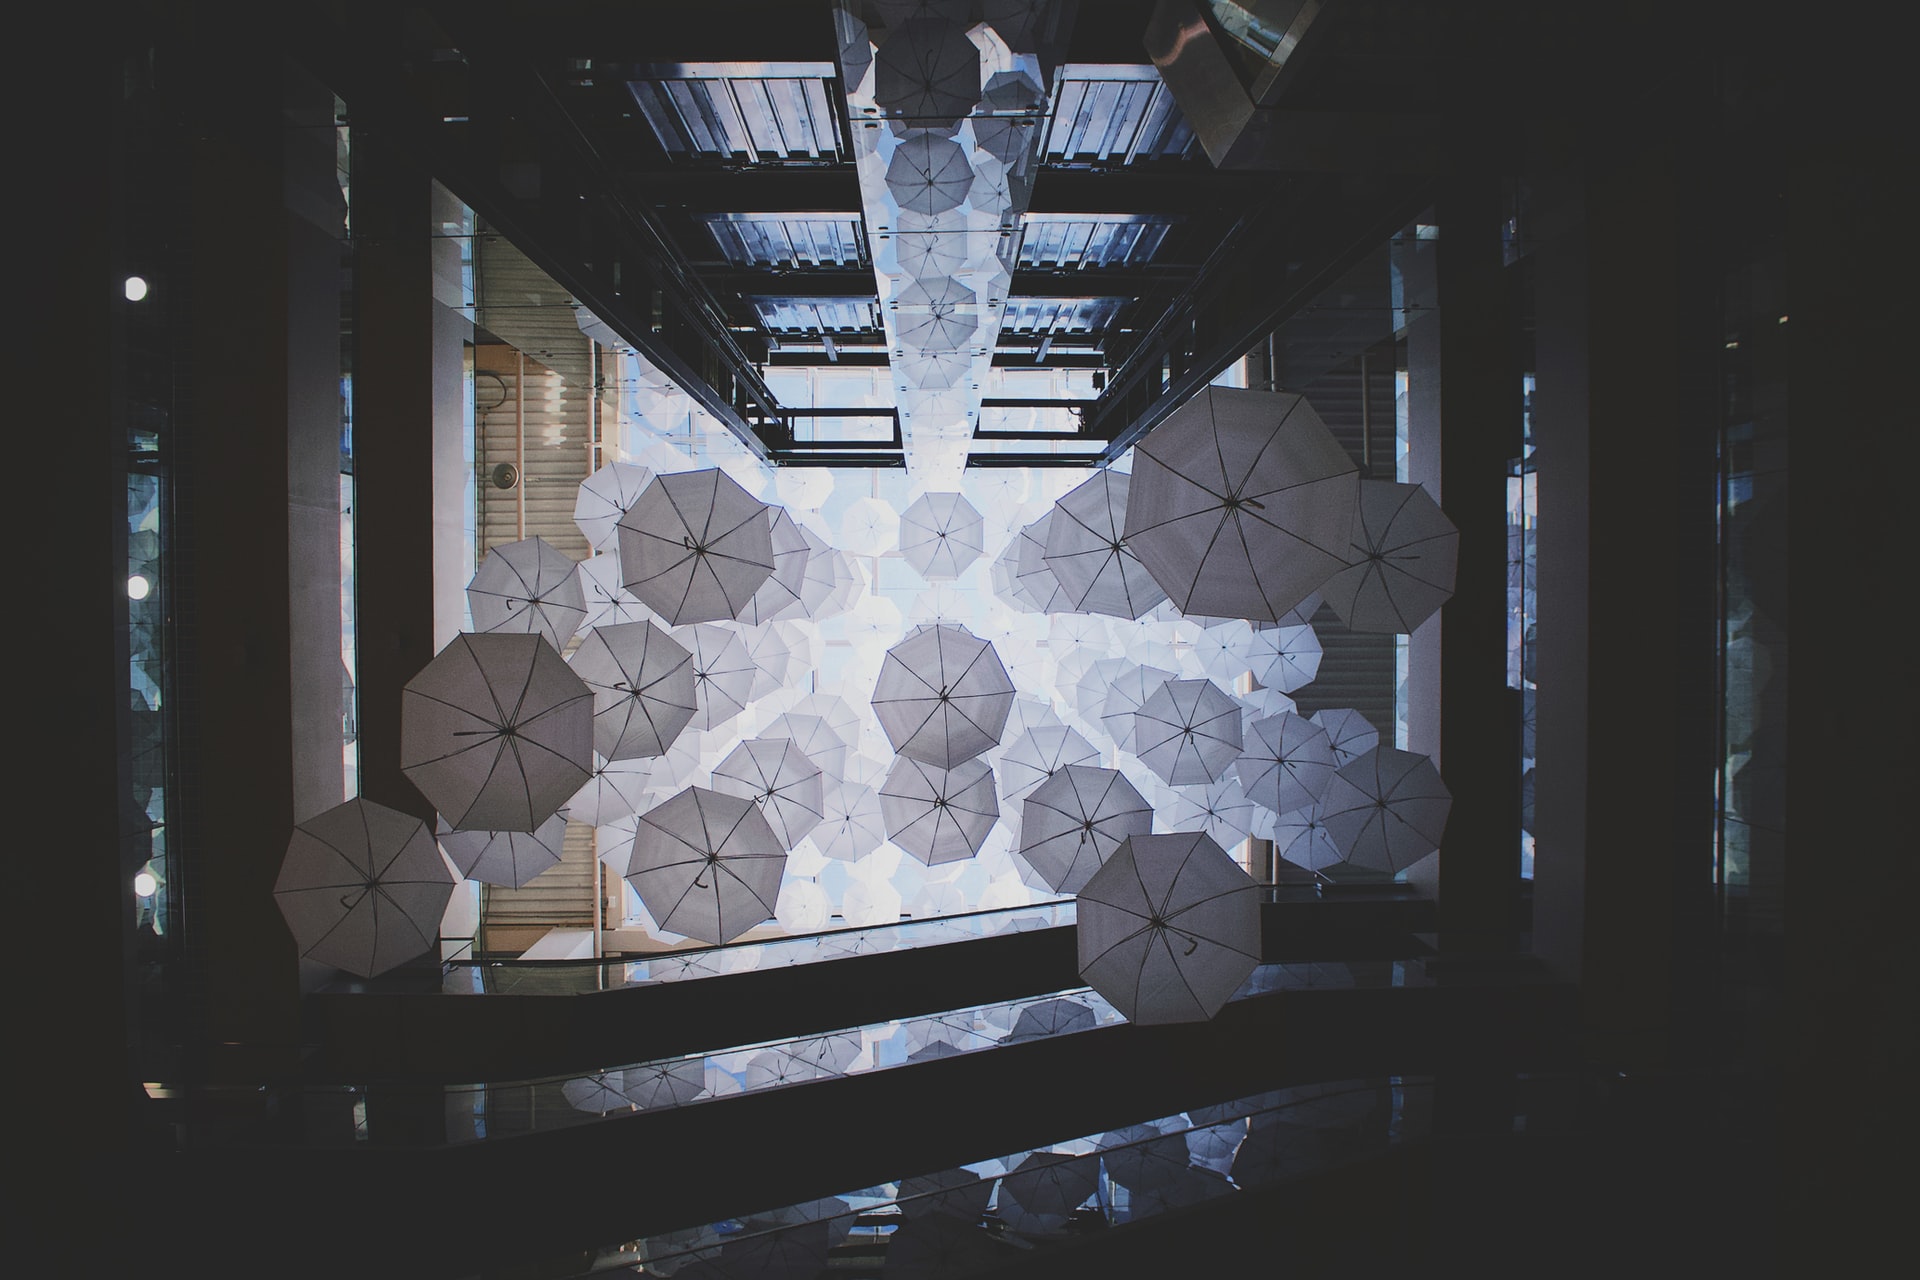 An abstract art installation of umbrellas hanging open.